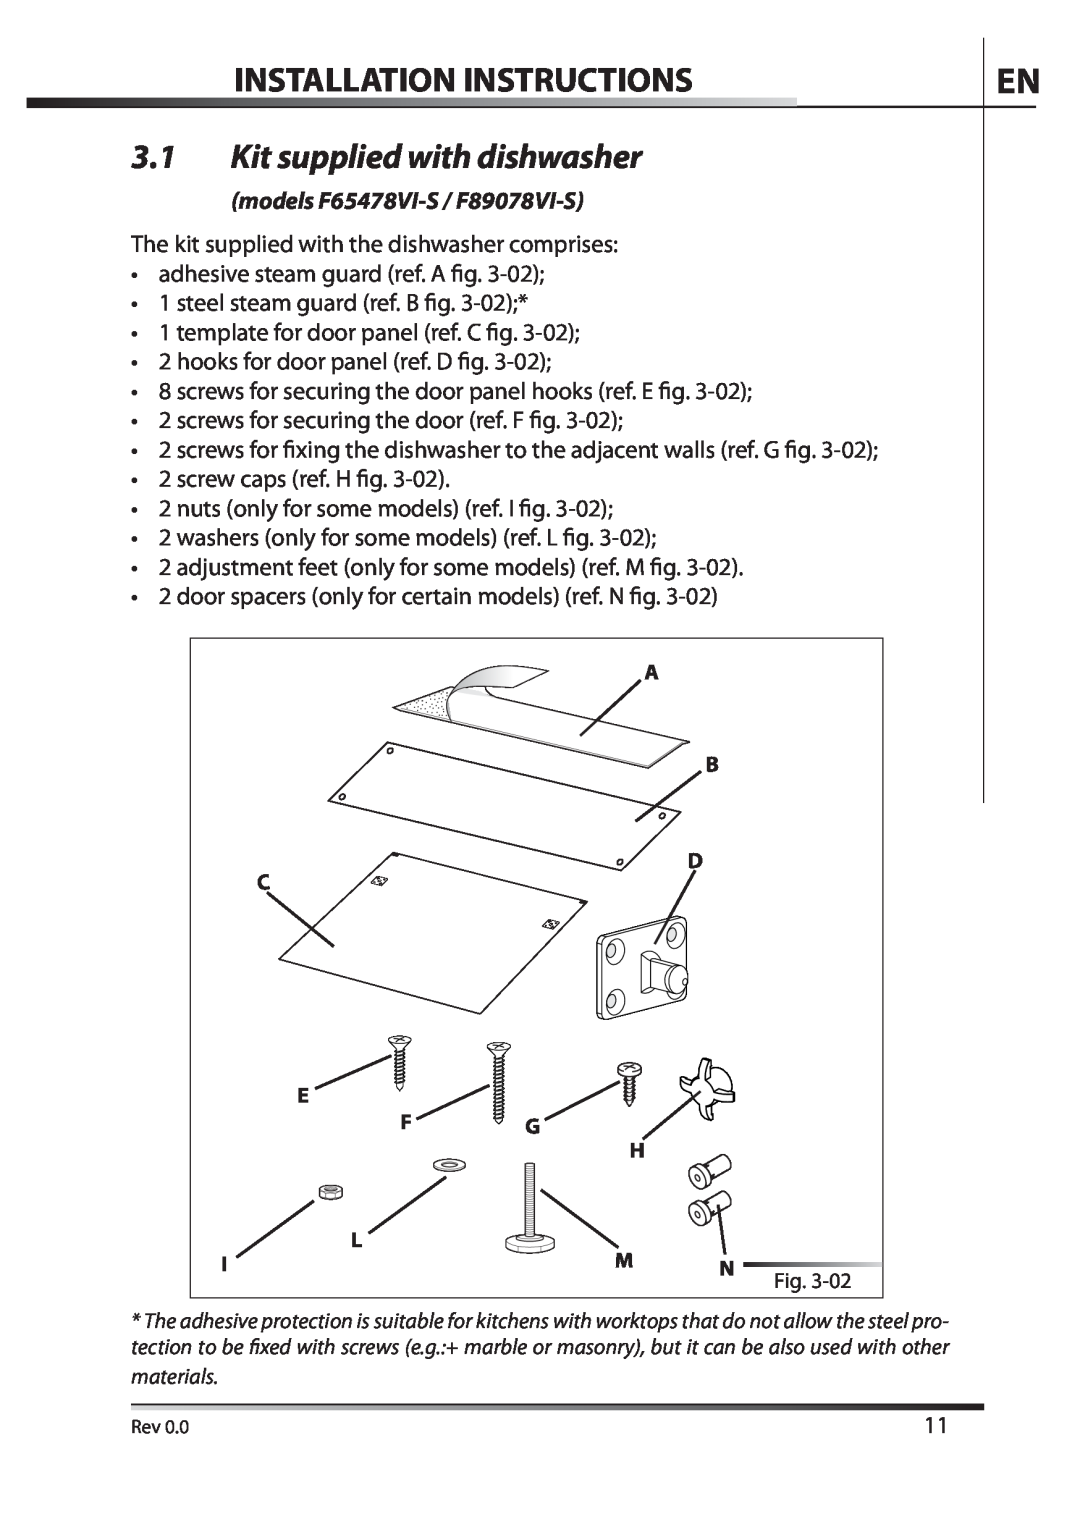 AEG F89078VI-M user manual Installation Instructions, Kit supplied with dishwasher, models F65478VI-S / F89078VI-S 